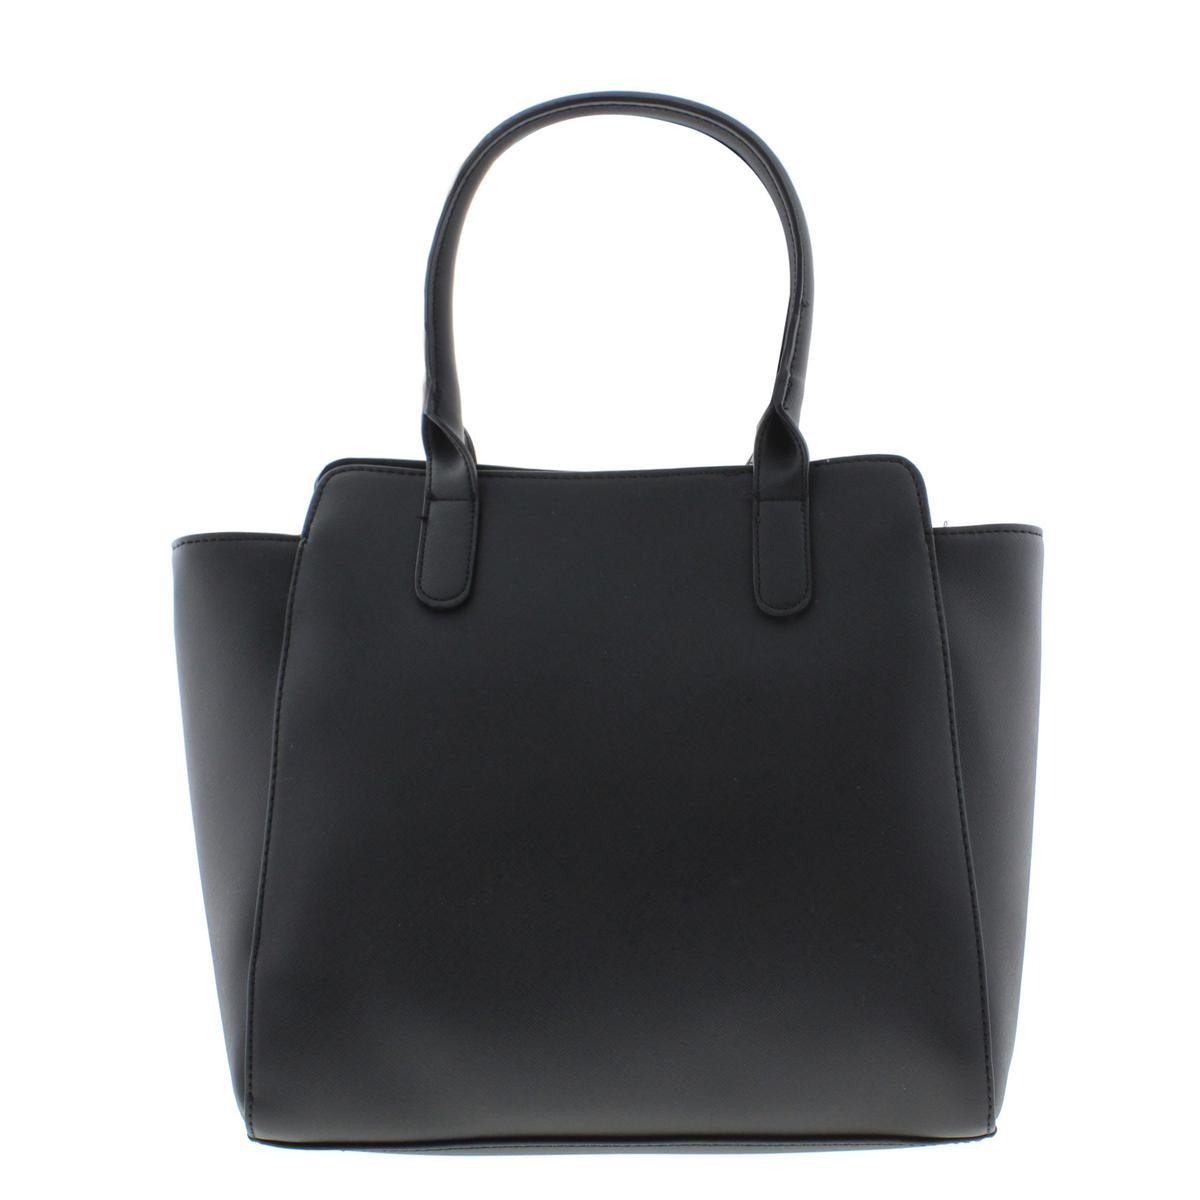 Kenneth Cole Reaction 6491 Womens Tourist Black Shopper Handbag Purse ...